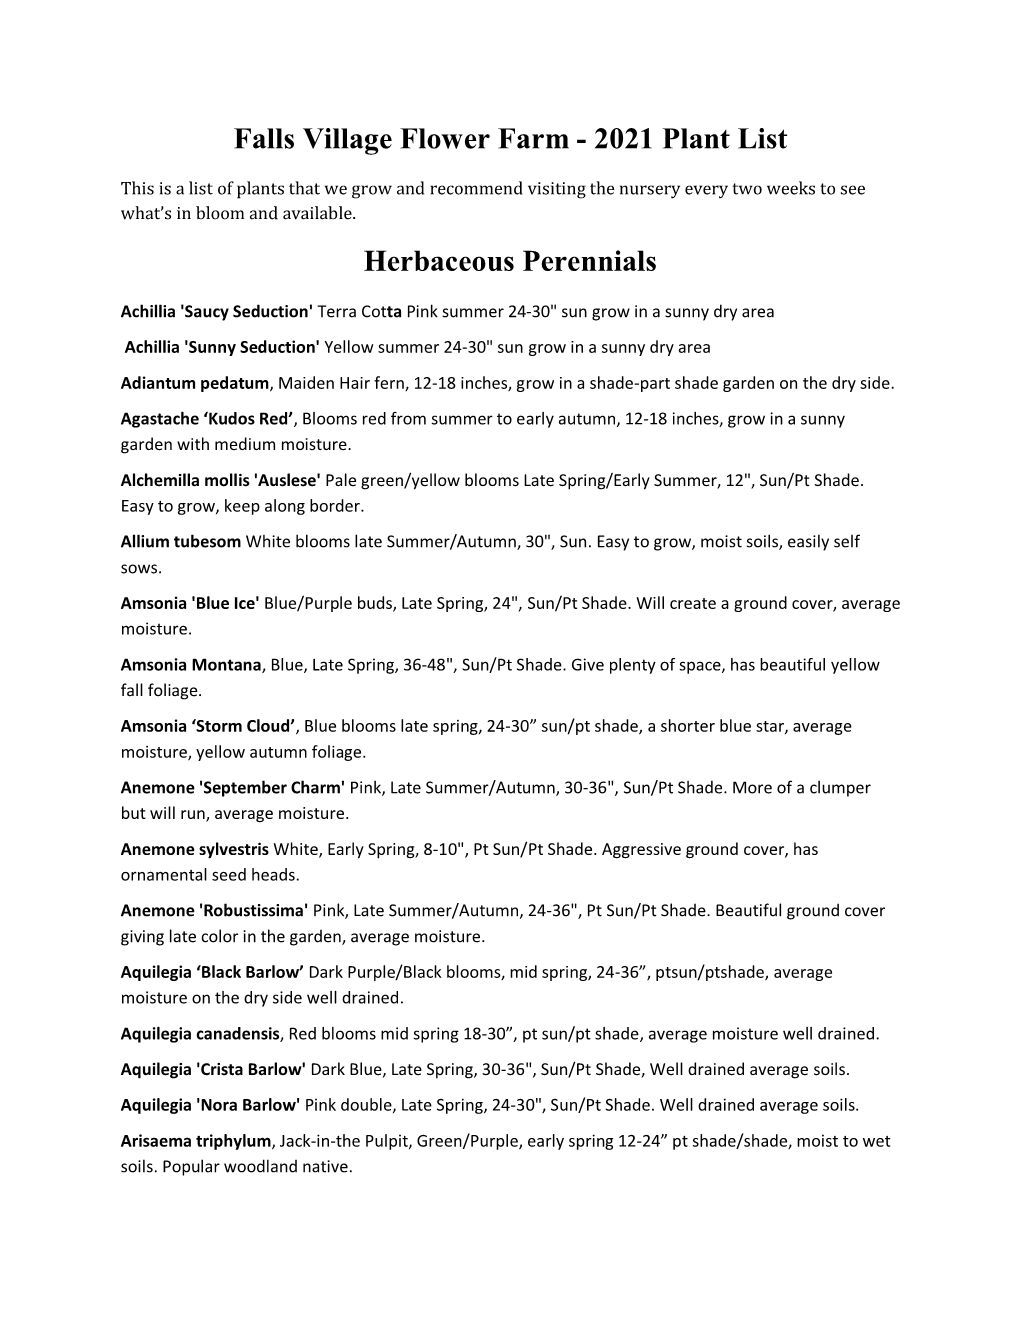 2021 Plant List Herbaceous Perennials